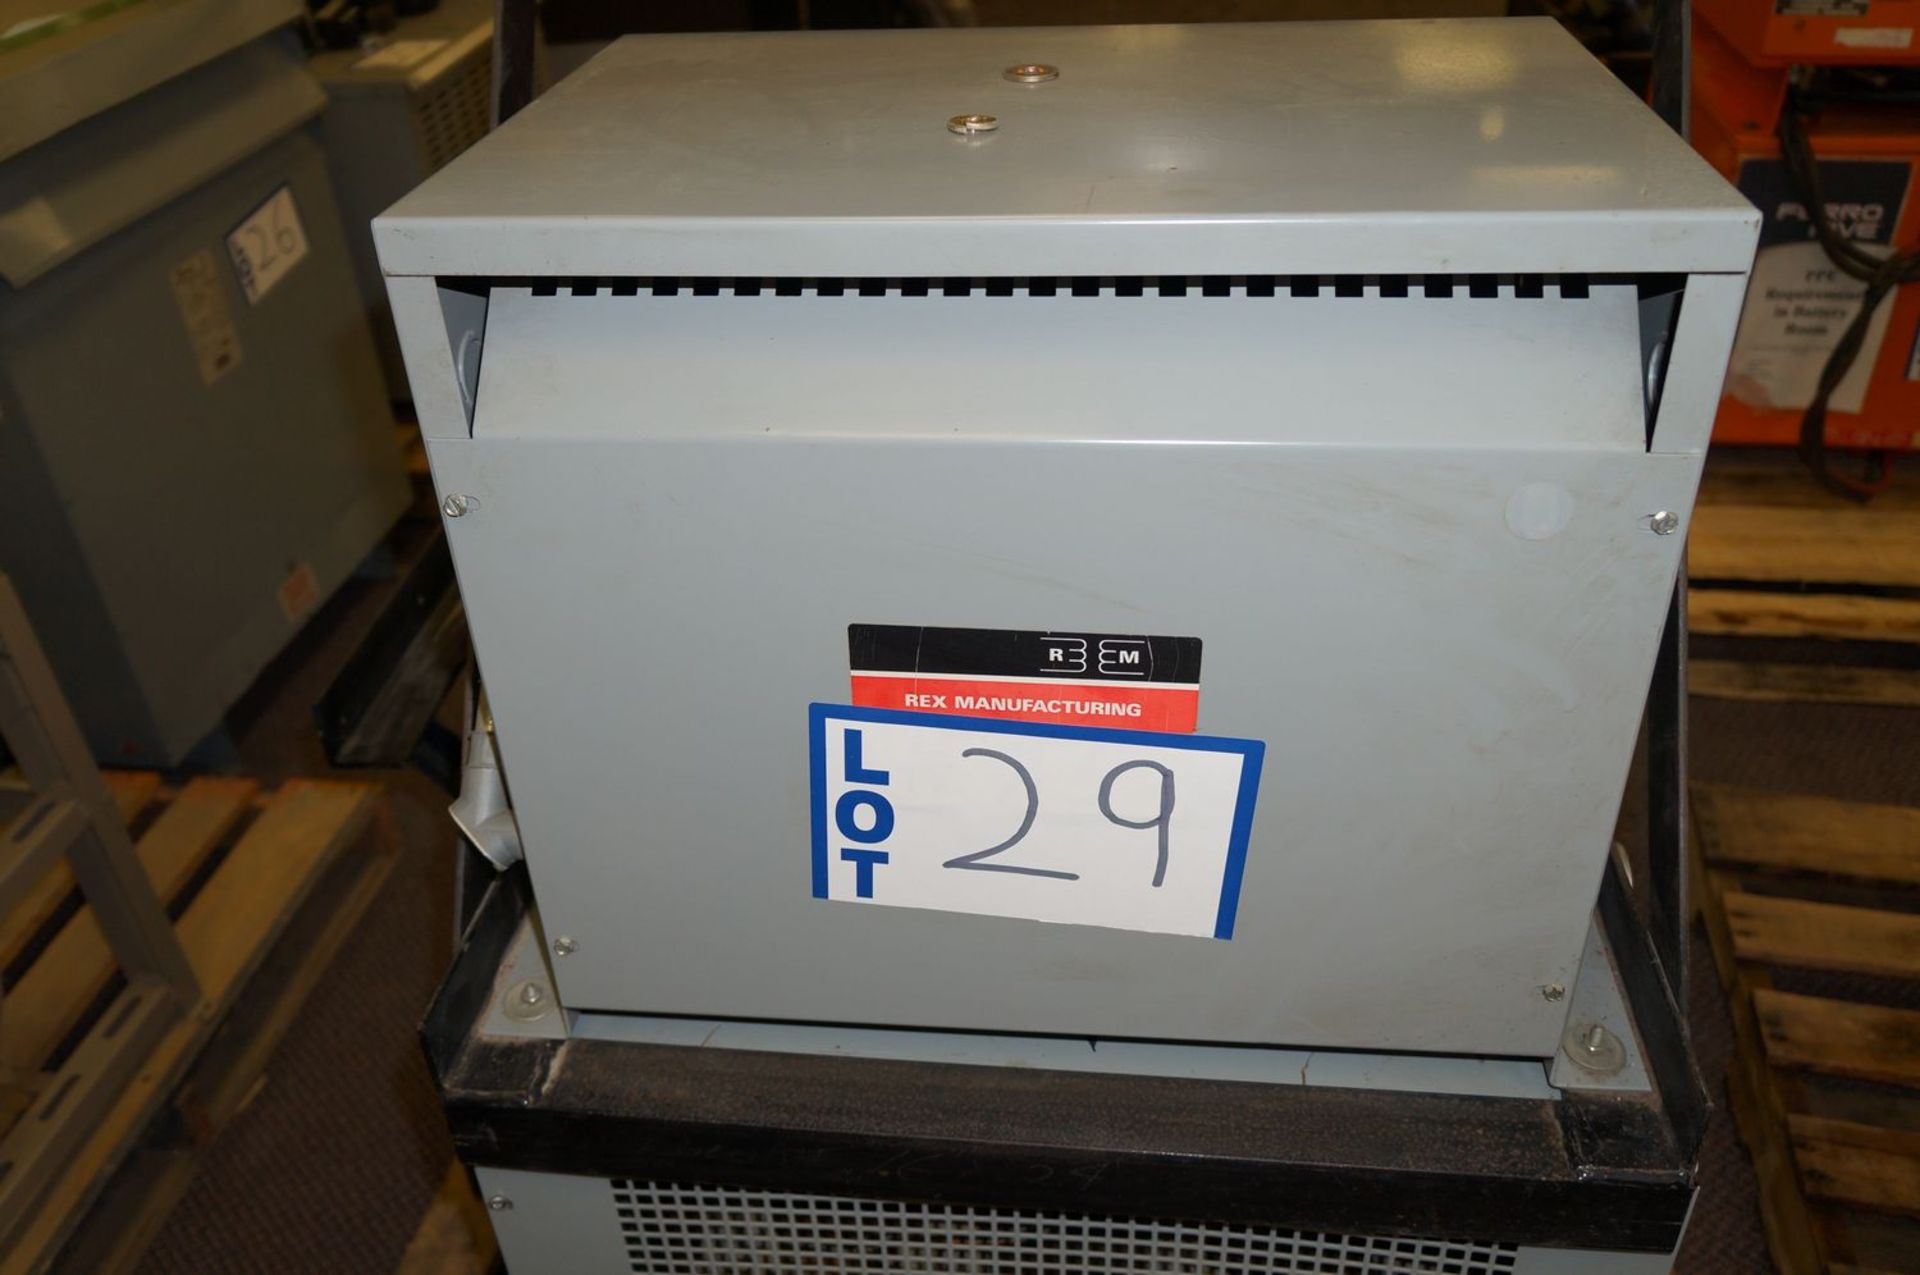 Rex 600 volt transformer. Kva 15,hv 600 lv 277, cont 150, %imp 6.0, type Ann